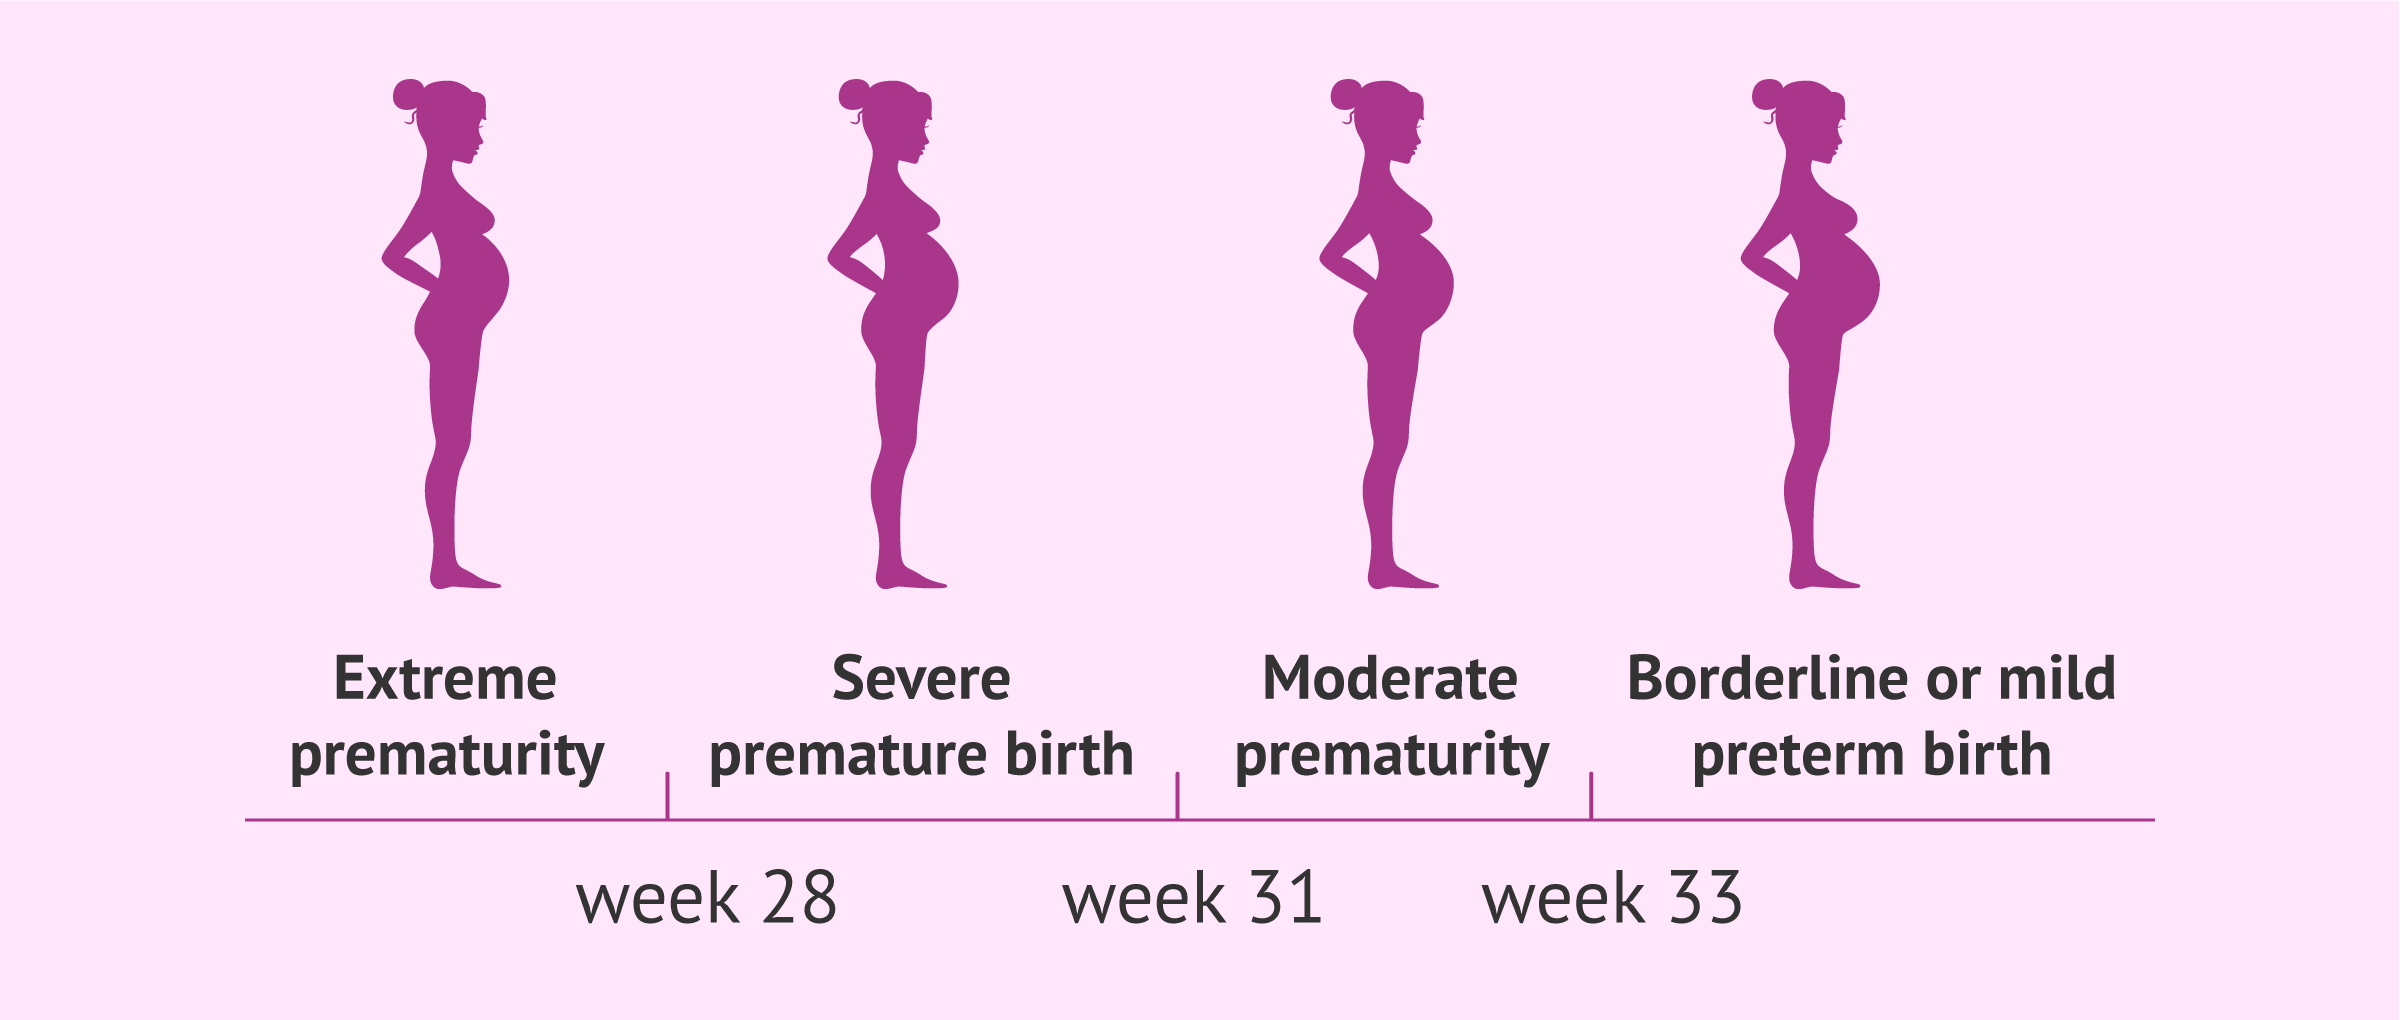 32nd week of pregnancy and preterm birth